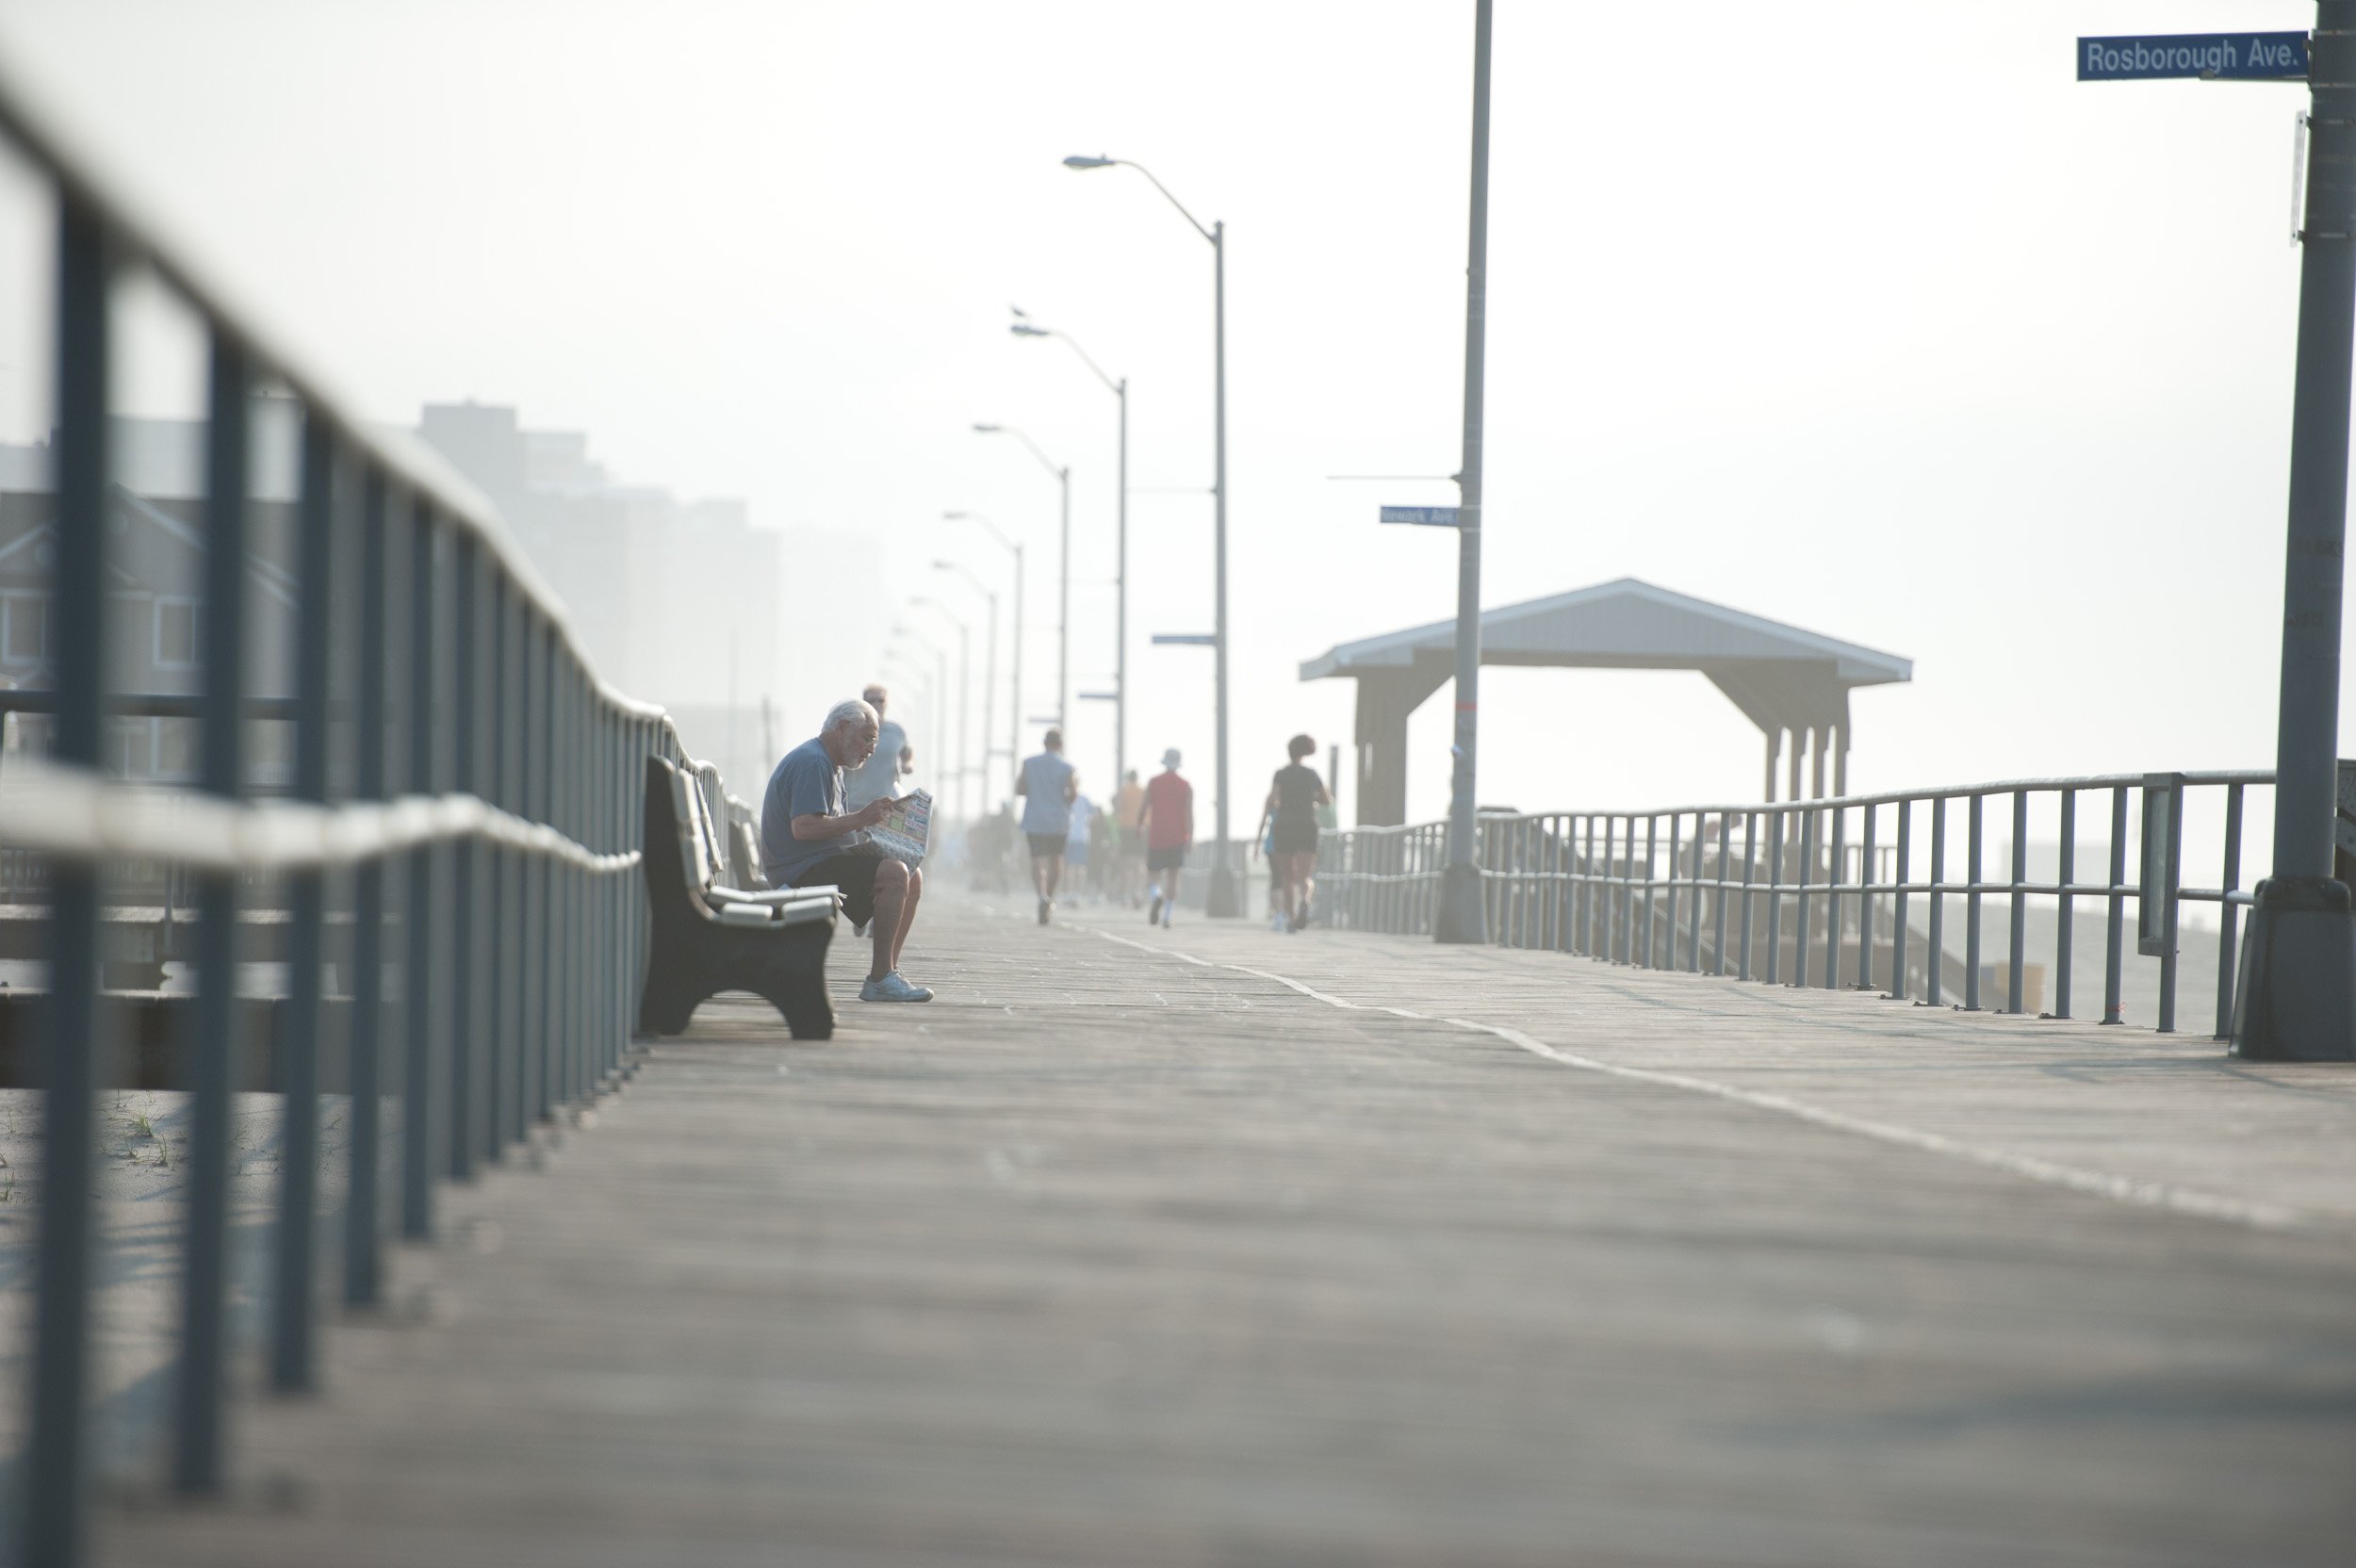 pam_korman_photography-one_bench-ocean-boardwalk-beach-people-03.jpg